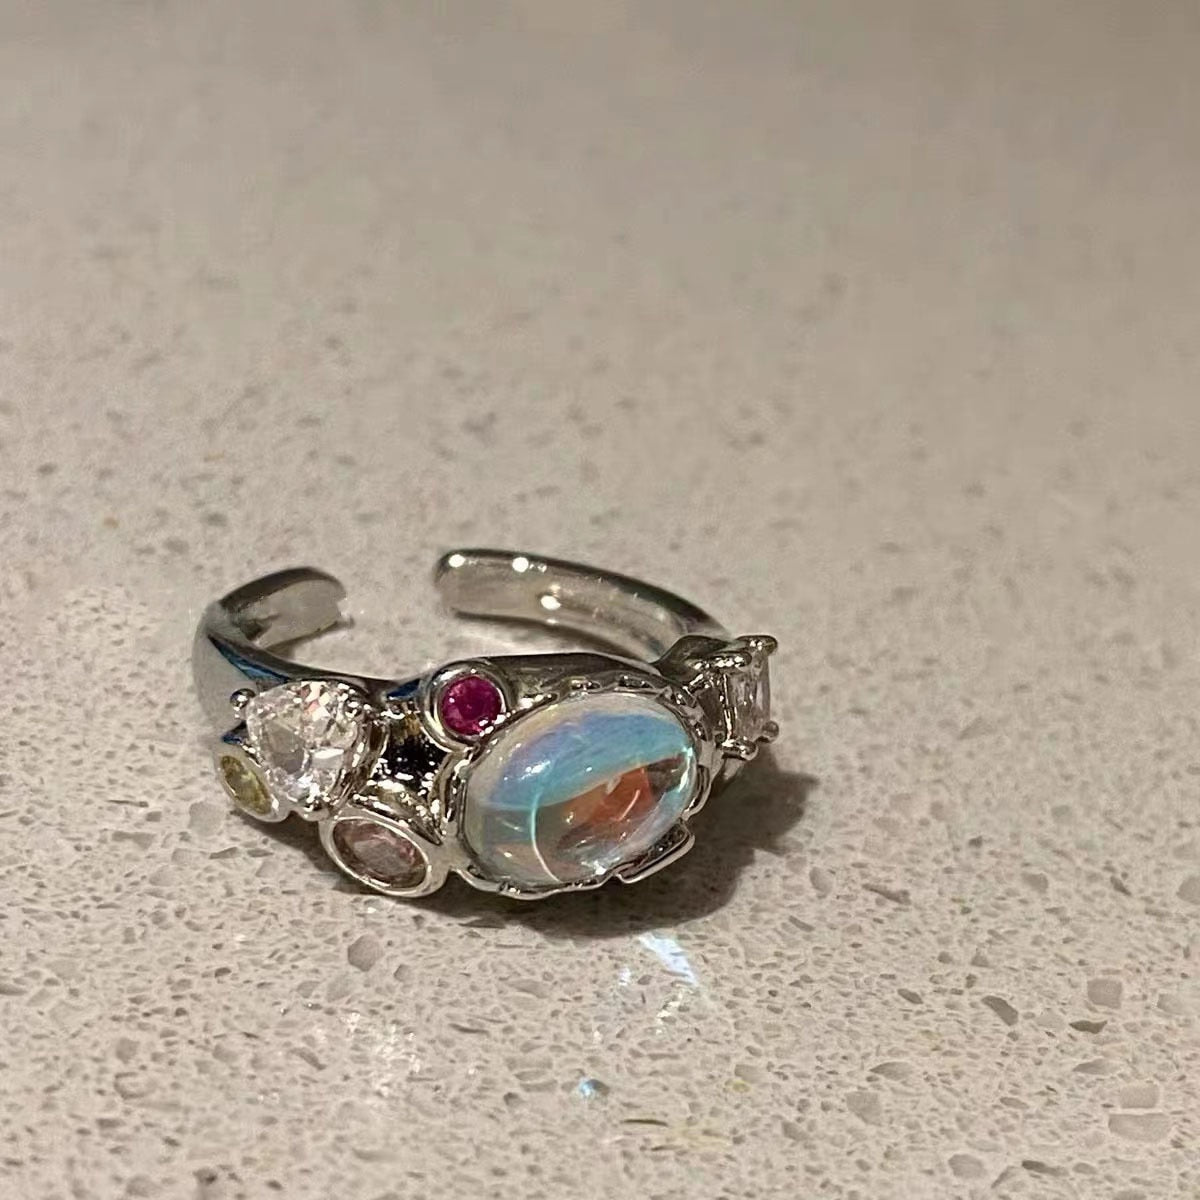 2022 Kpop Pink Crystal LOVE Heart Open Ring For Women BFF Wedding Luxury Vintage Grunge Aesthetic Jewelry EMO Y2K Accessories